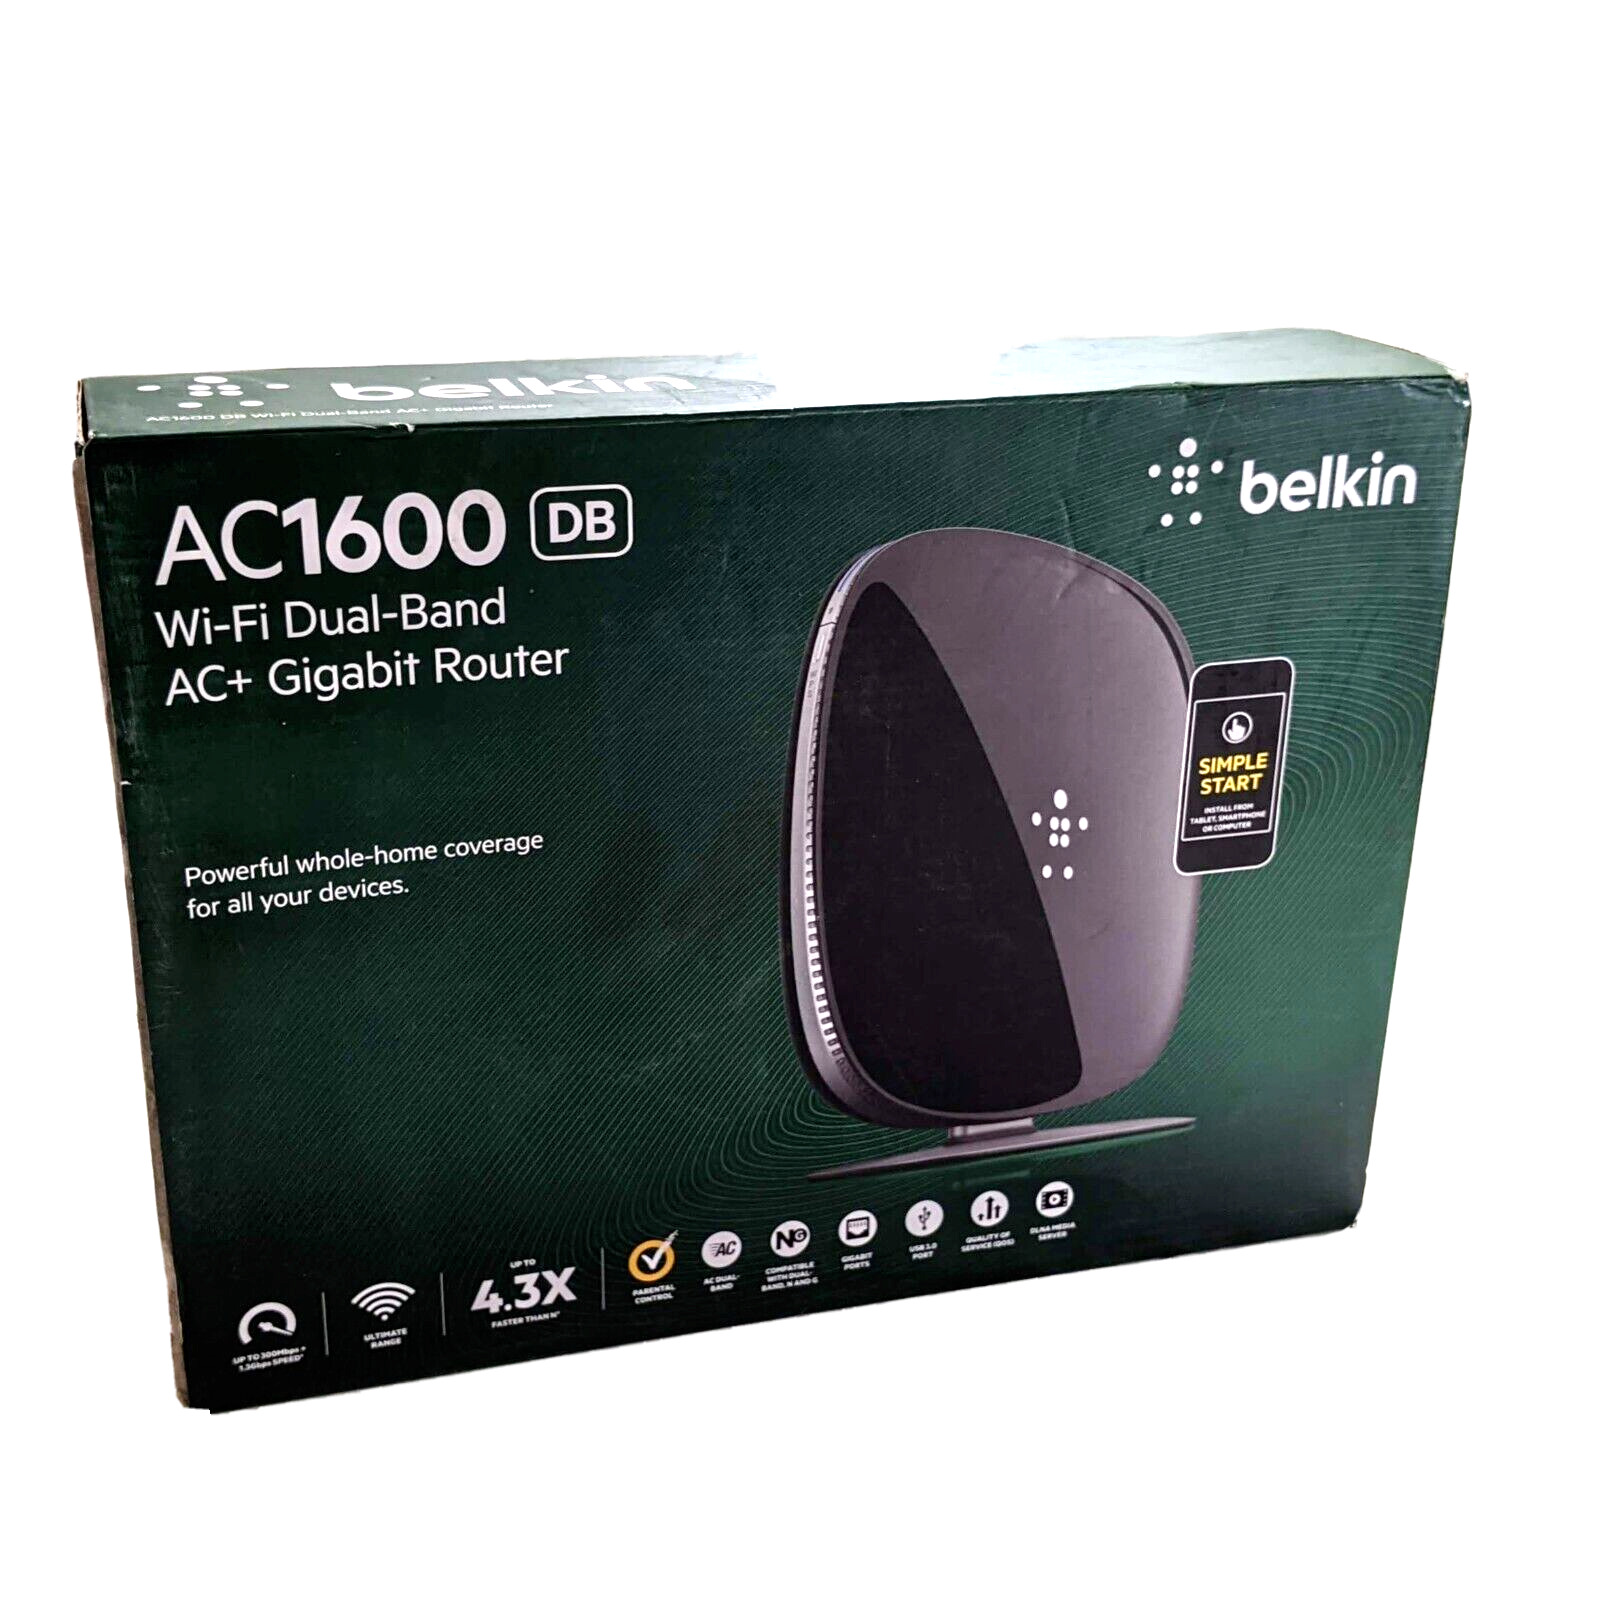 Belkin AC1600 DB  Mbps 4 Port 1000 Mbps Wireless Router (F9K1119) Gigabit AC+